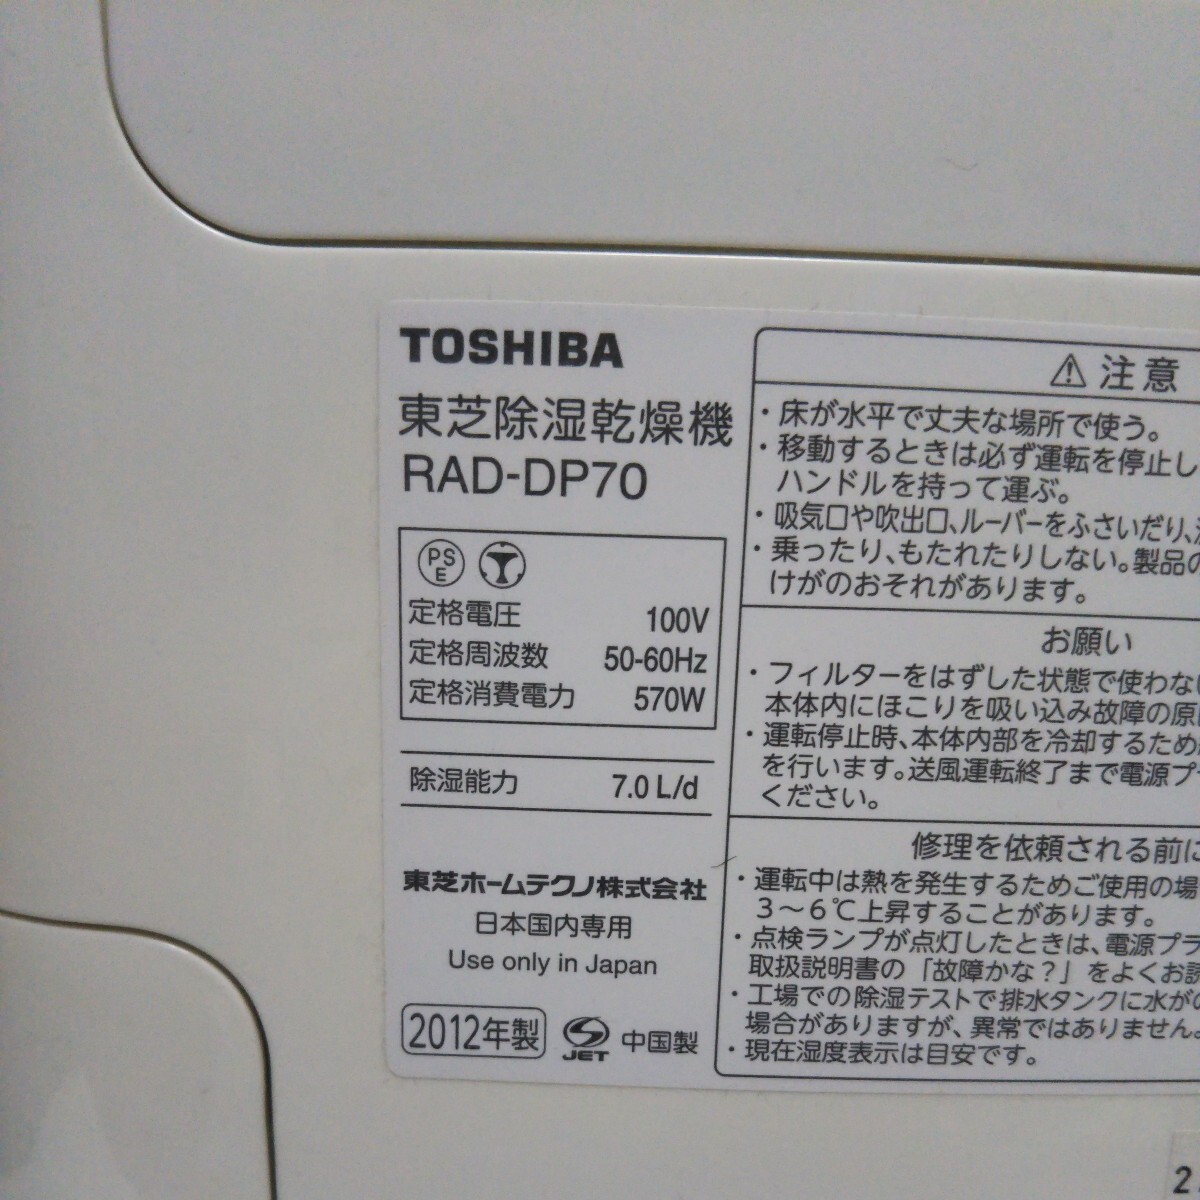  free shipping (1M1101)TOSHIBA Toshiba clothes dry dehumidifier dehumidifier clothes dry RAD-DP70